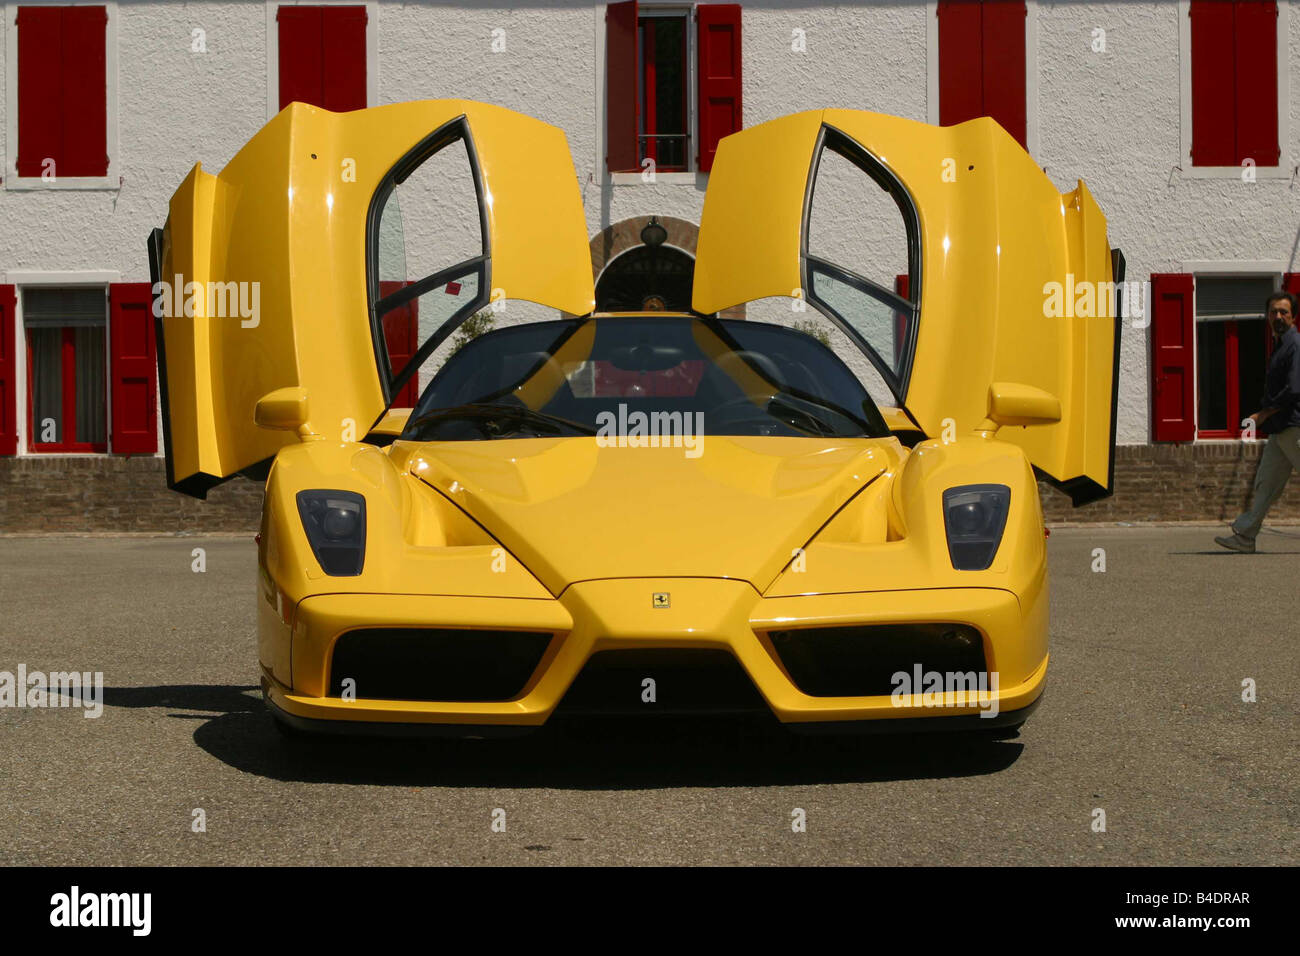 Car, Ferrari Enzo Ferrari, roadster, coupe, model year 2002-, yellow, frontal view, standing, upholding, open doors Stock Photo